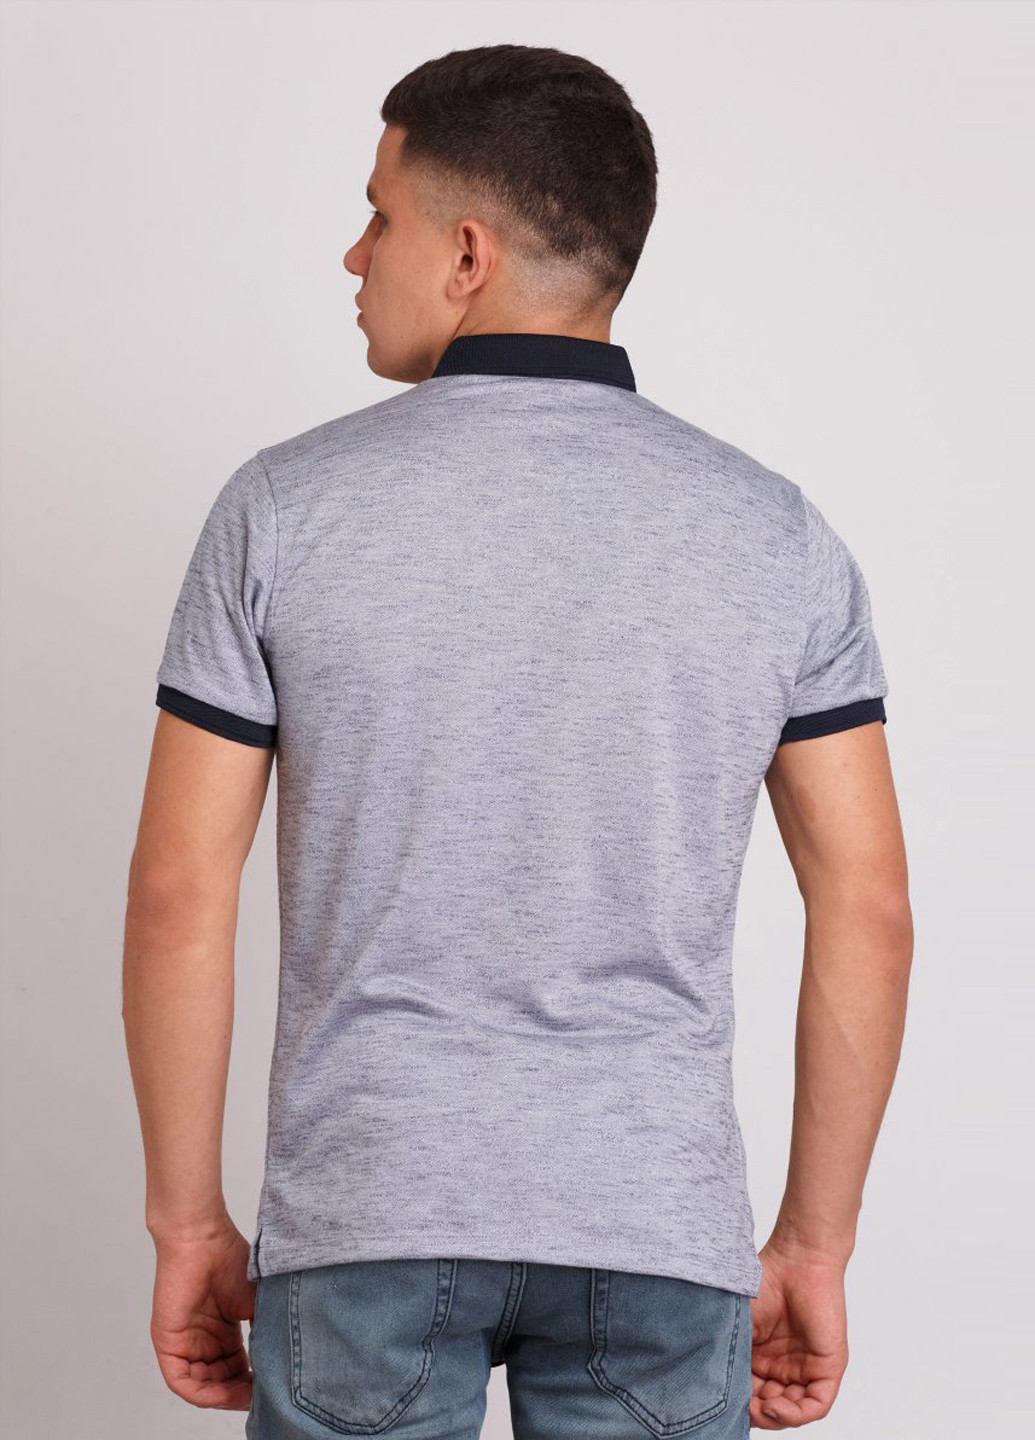 Серо-синяя футболка-поло для мужчин Trend Collection меланжевая